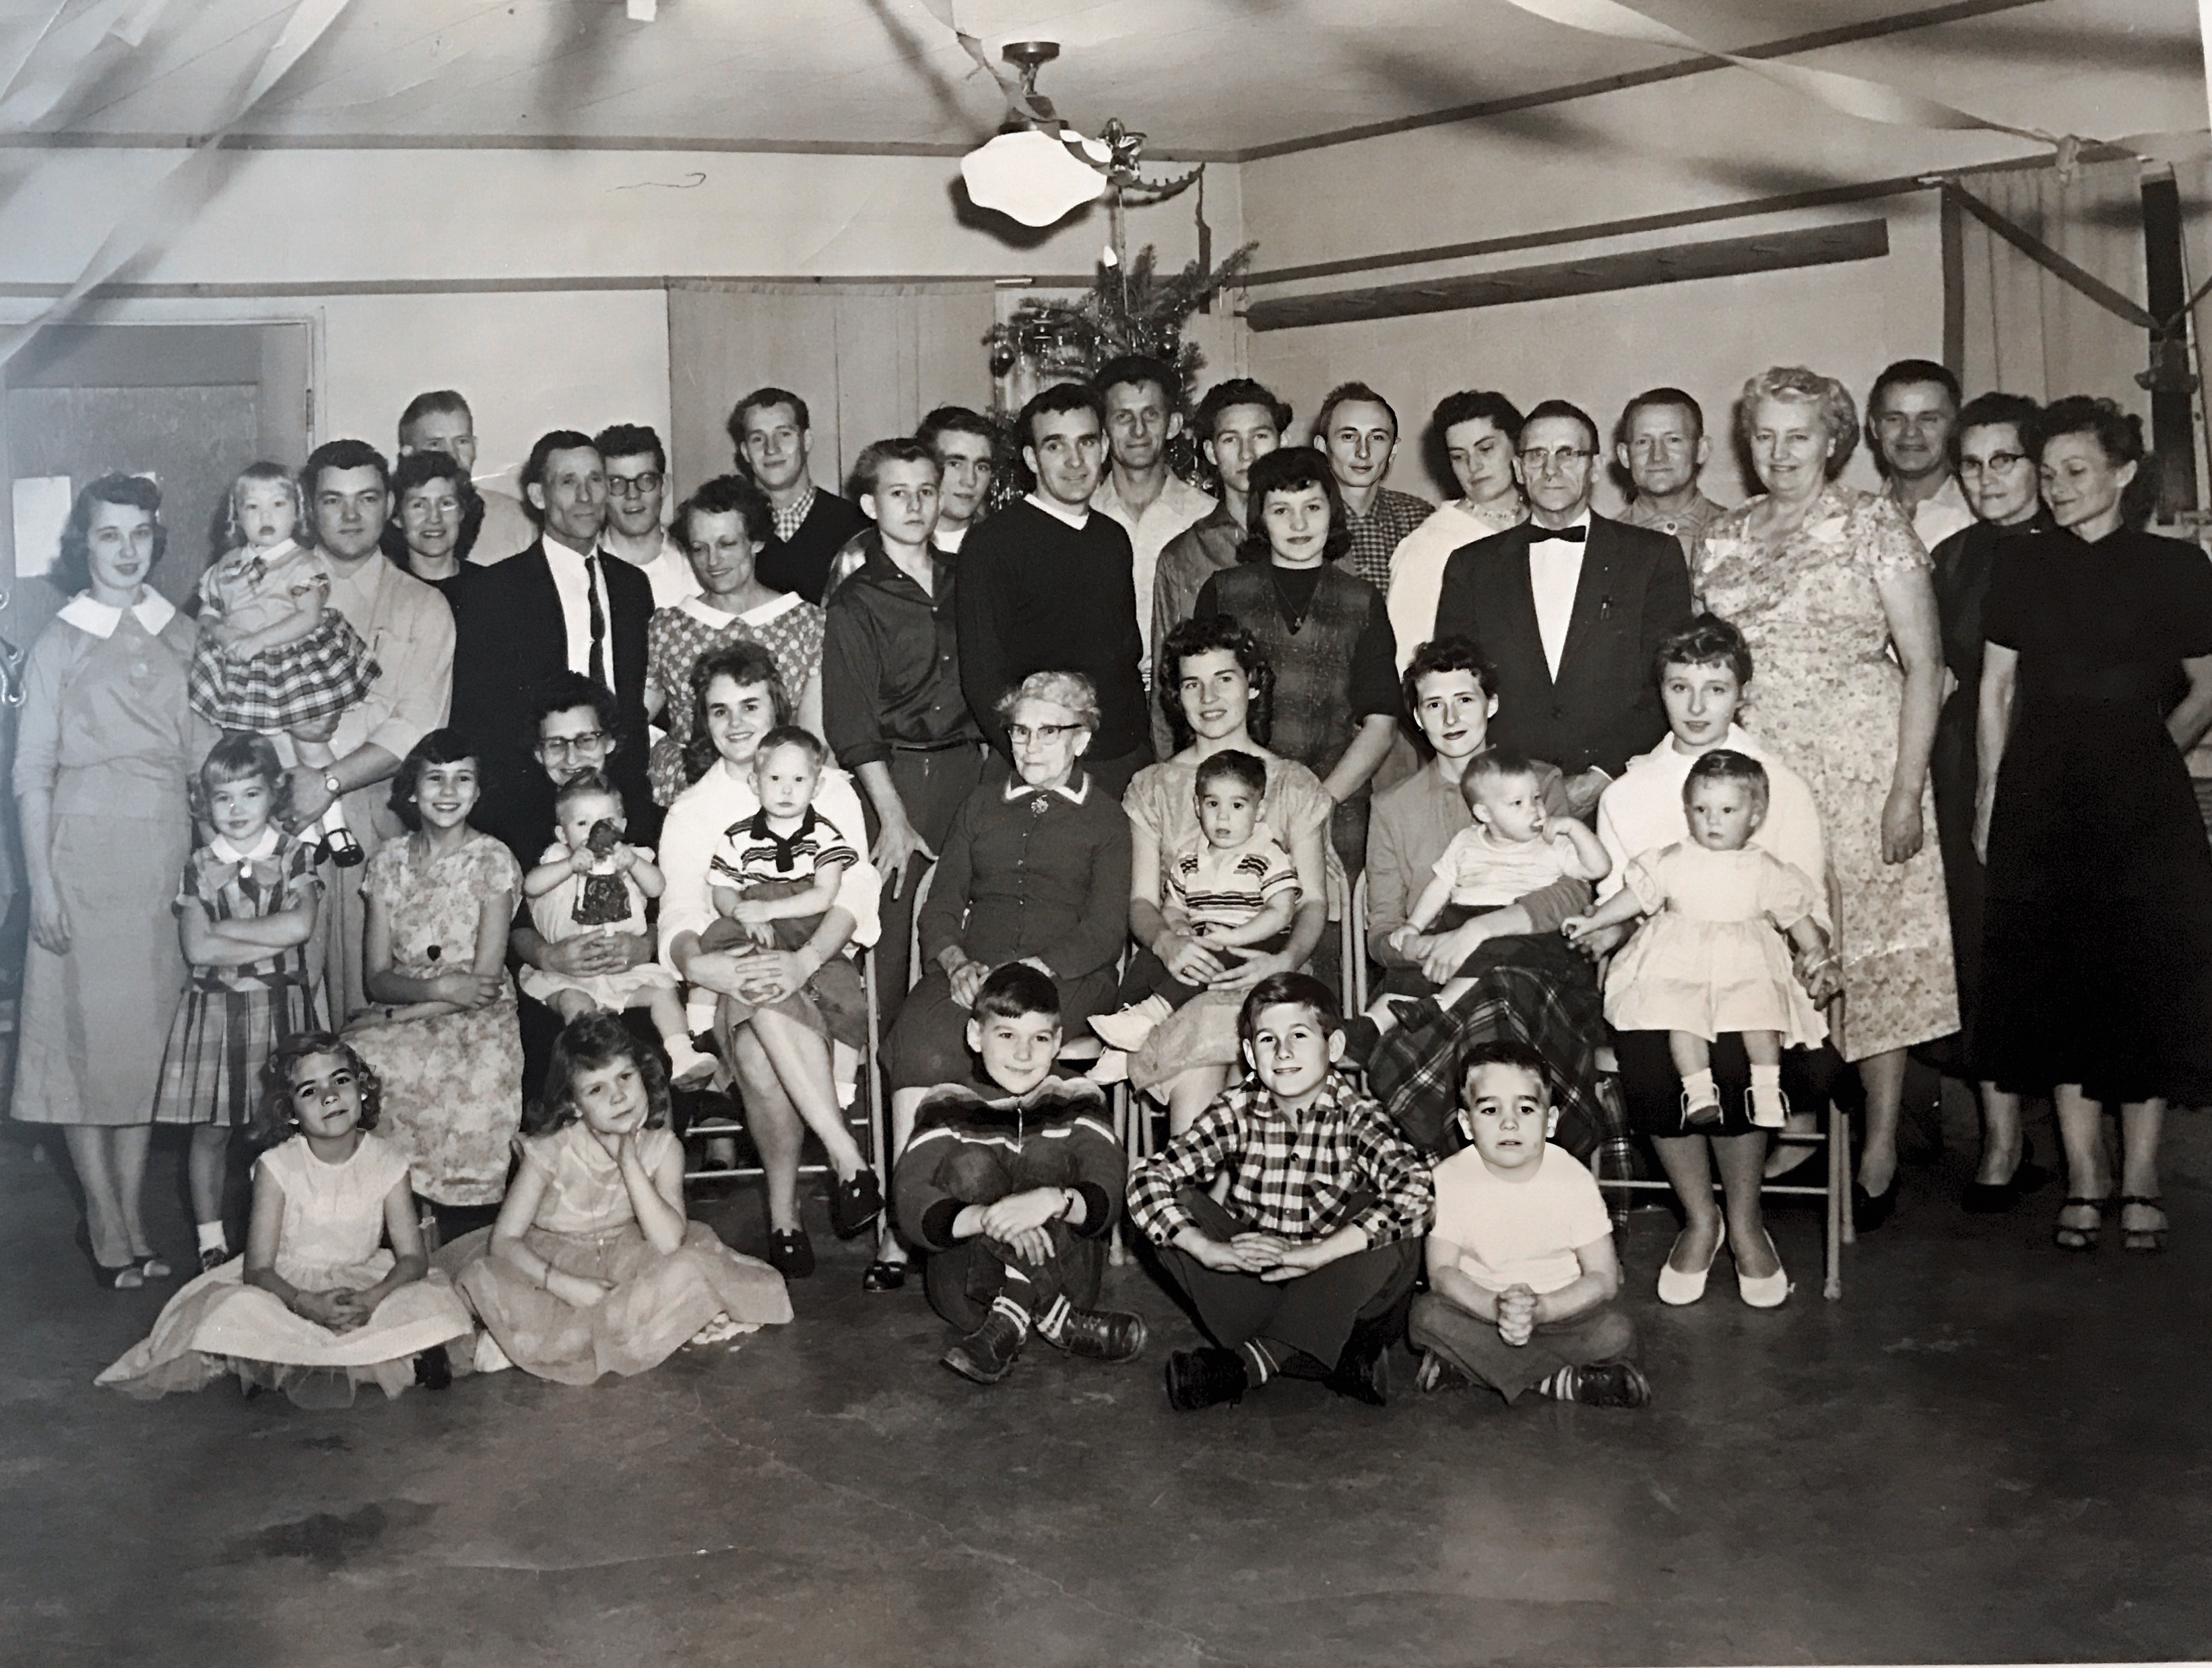 1958 Gleason Family Reunion held at the Hayden Community center on Hayden Avenue. Hayden Lake Idaho